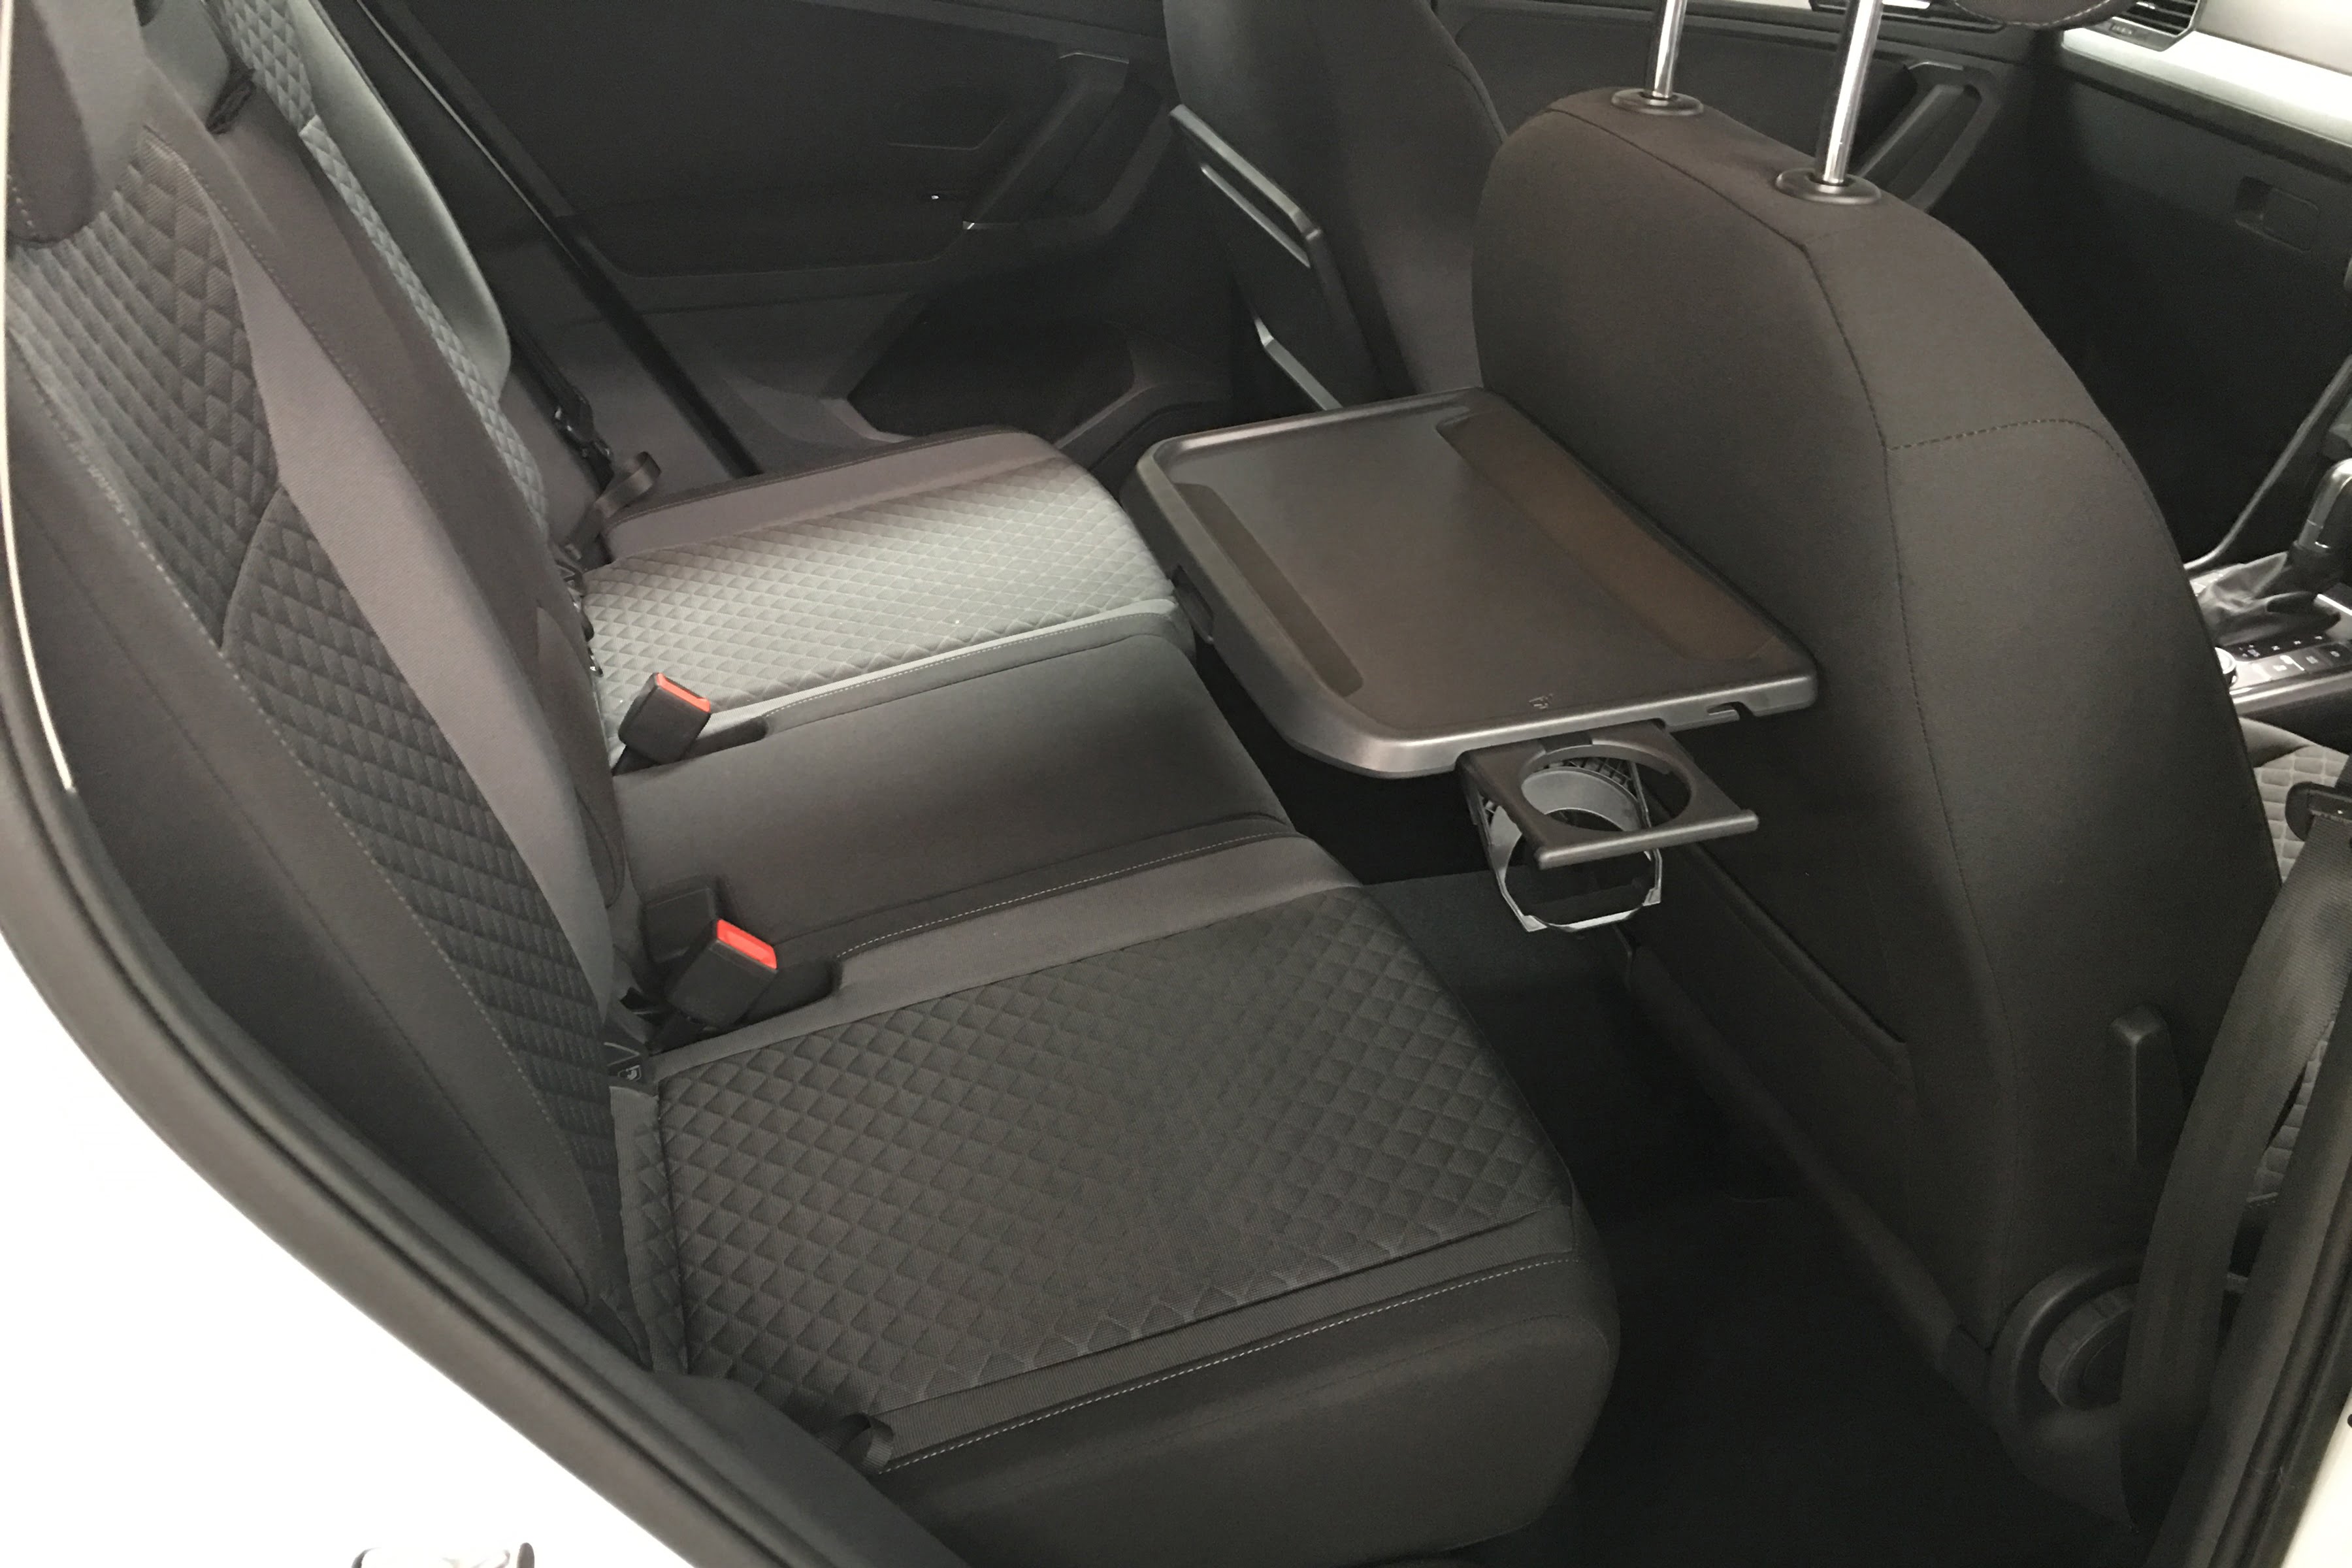 VW Tiguan 132 TSi Comfortline rear seats